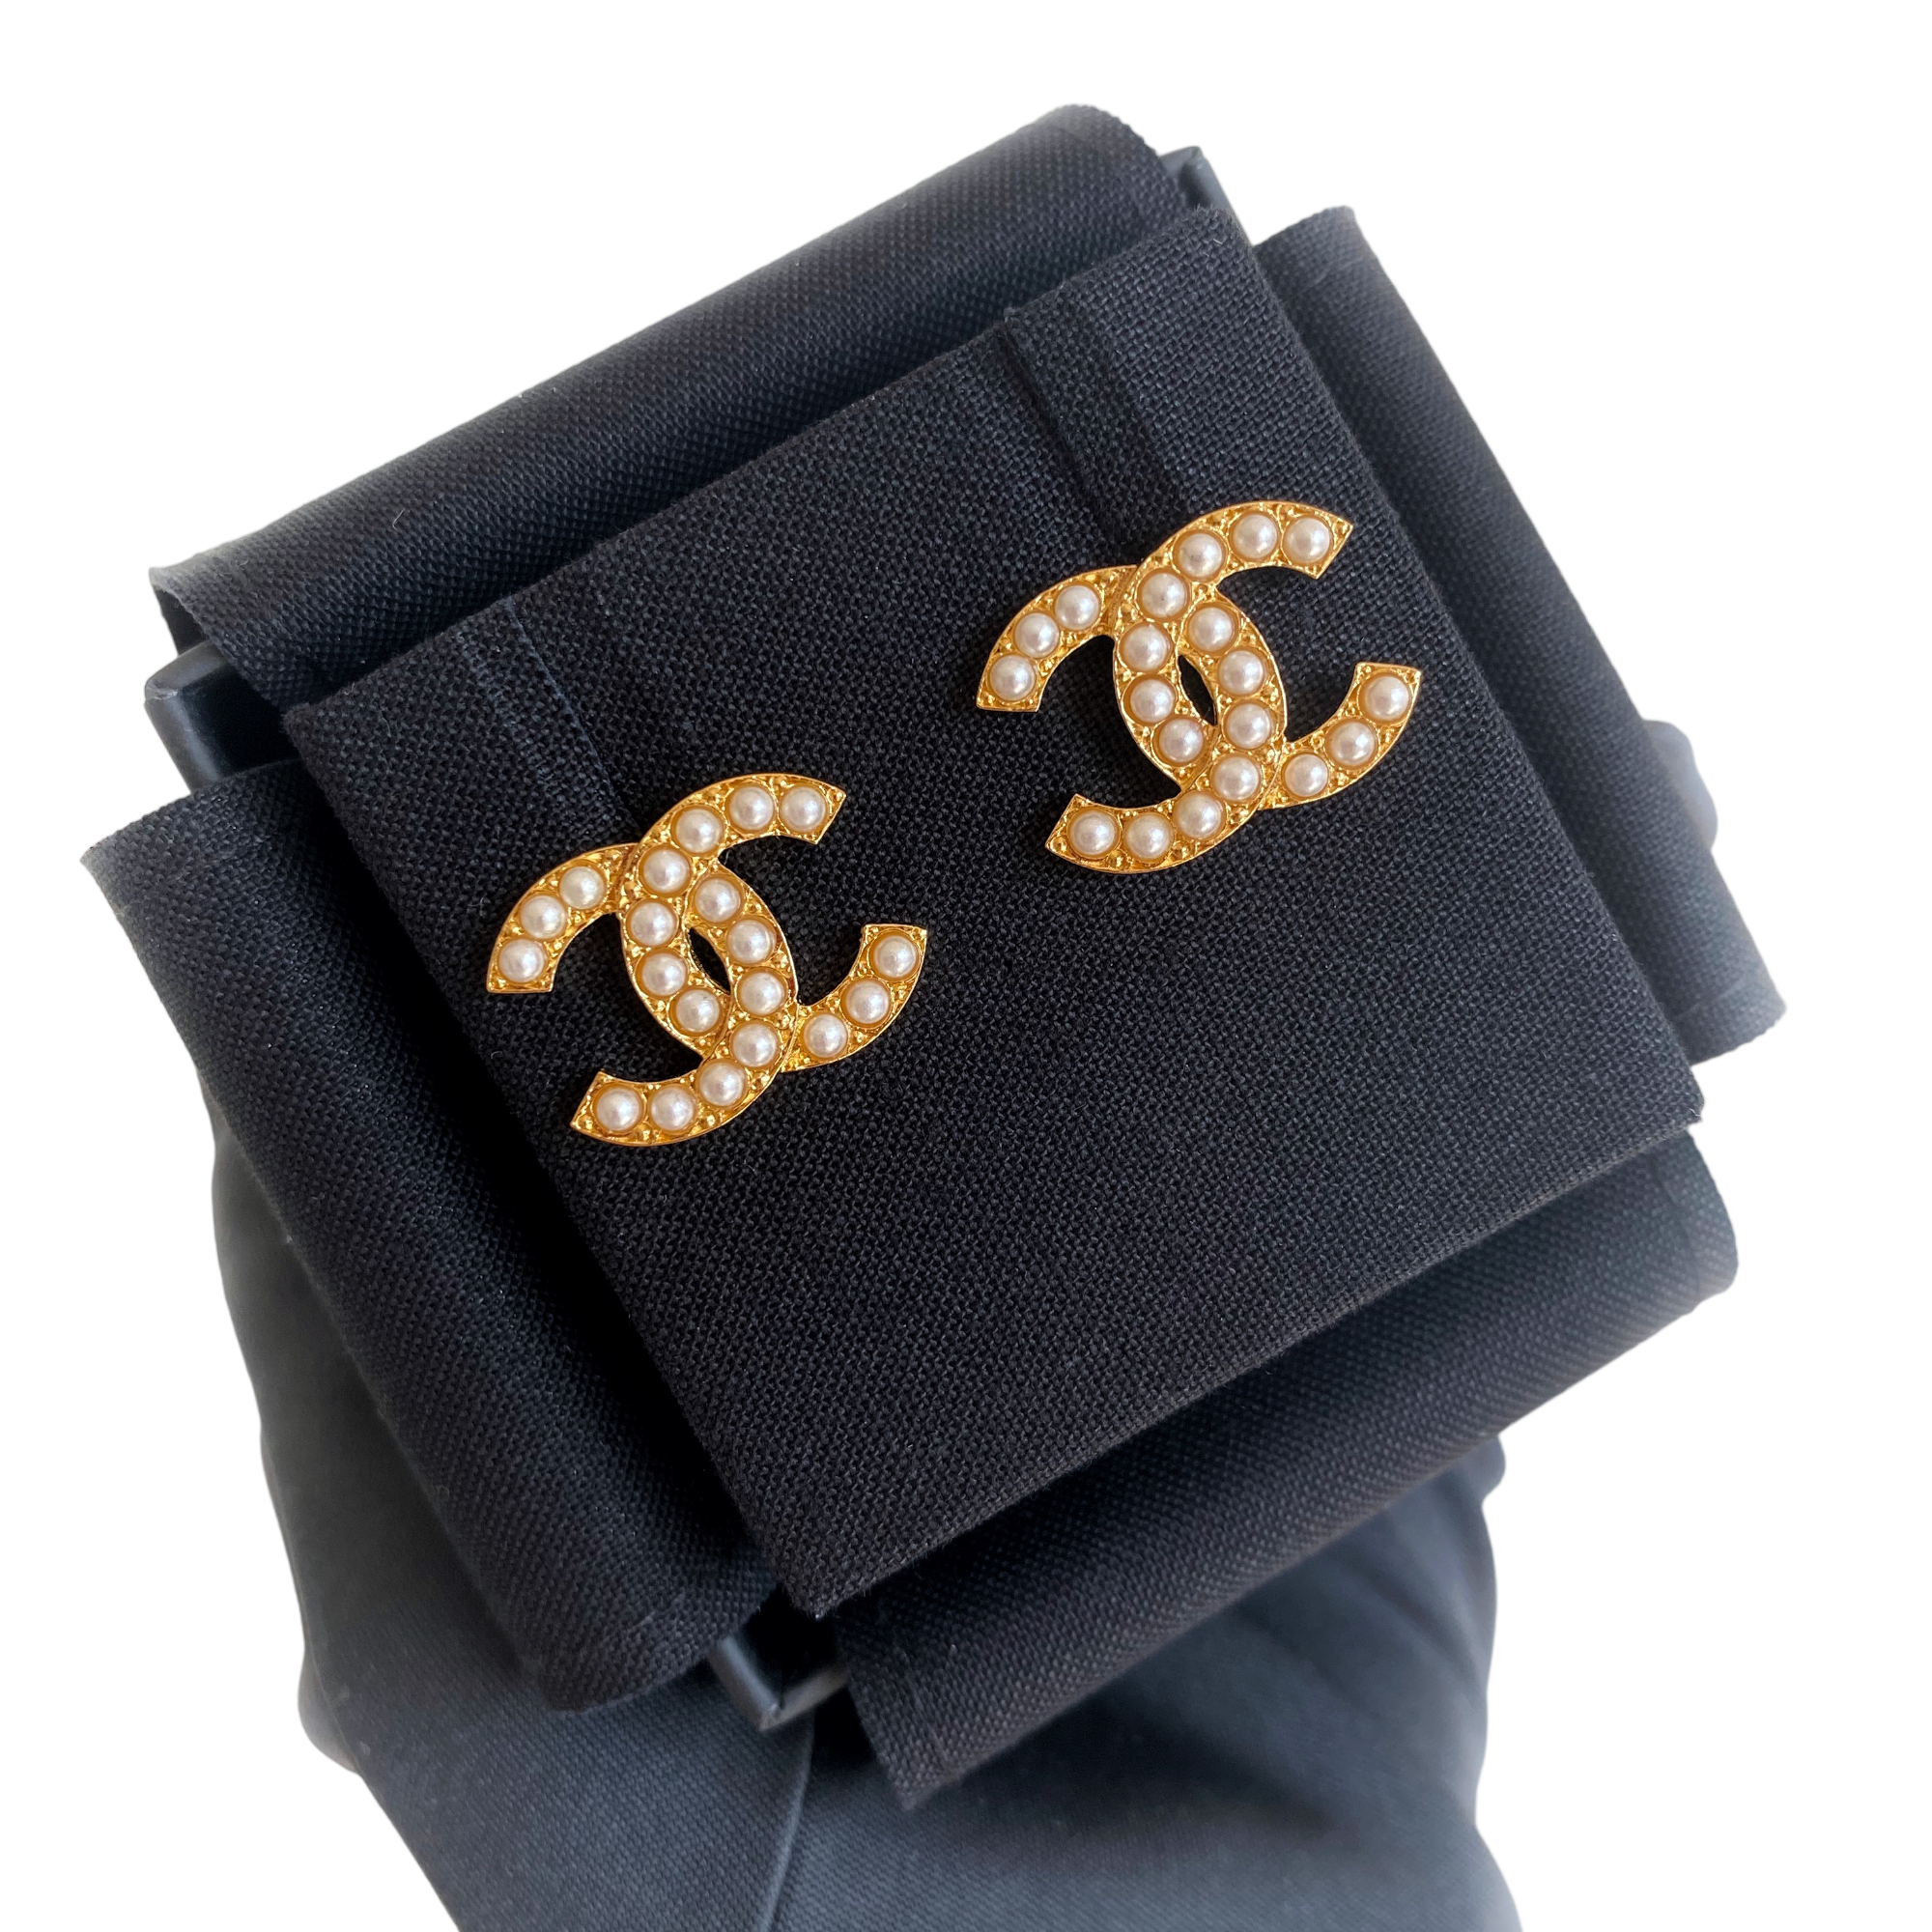 Chanel 1997 Heart Earrings Gold Medium 46359 - 2 Pieces | Chairish